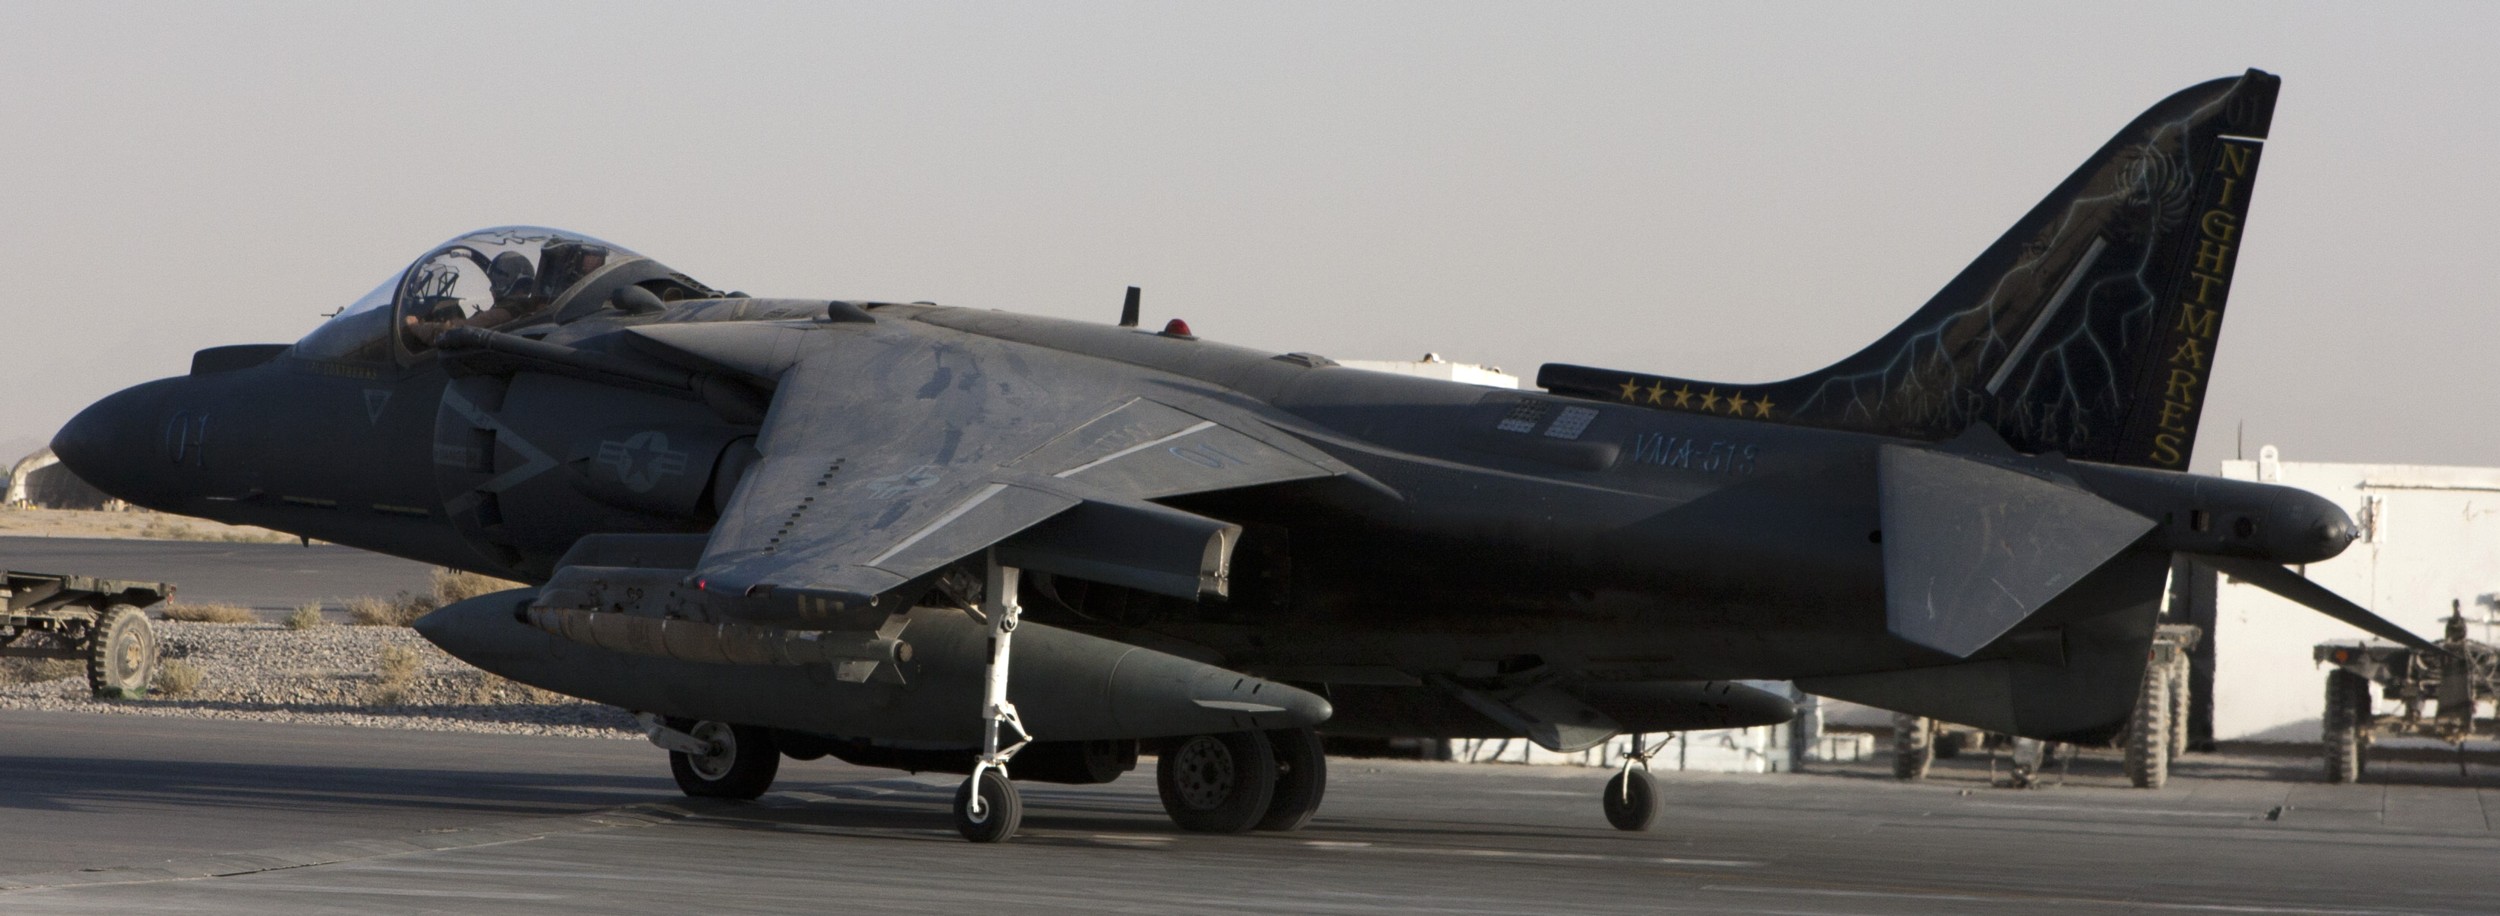 vma-513 flying nightmares av-8b harrier kandahar airfield afghanistan 2011 79